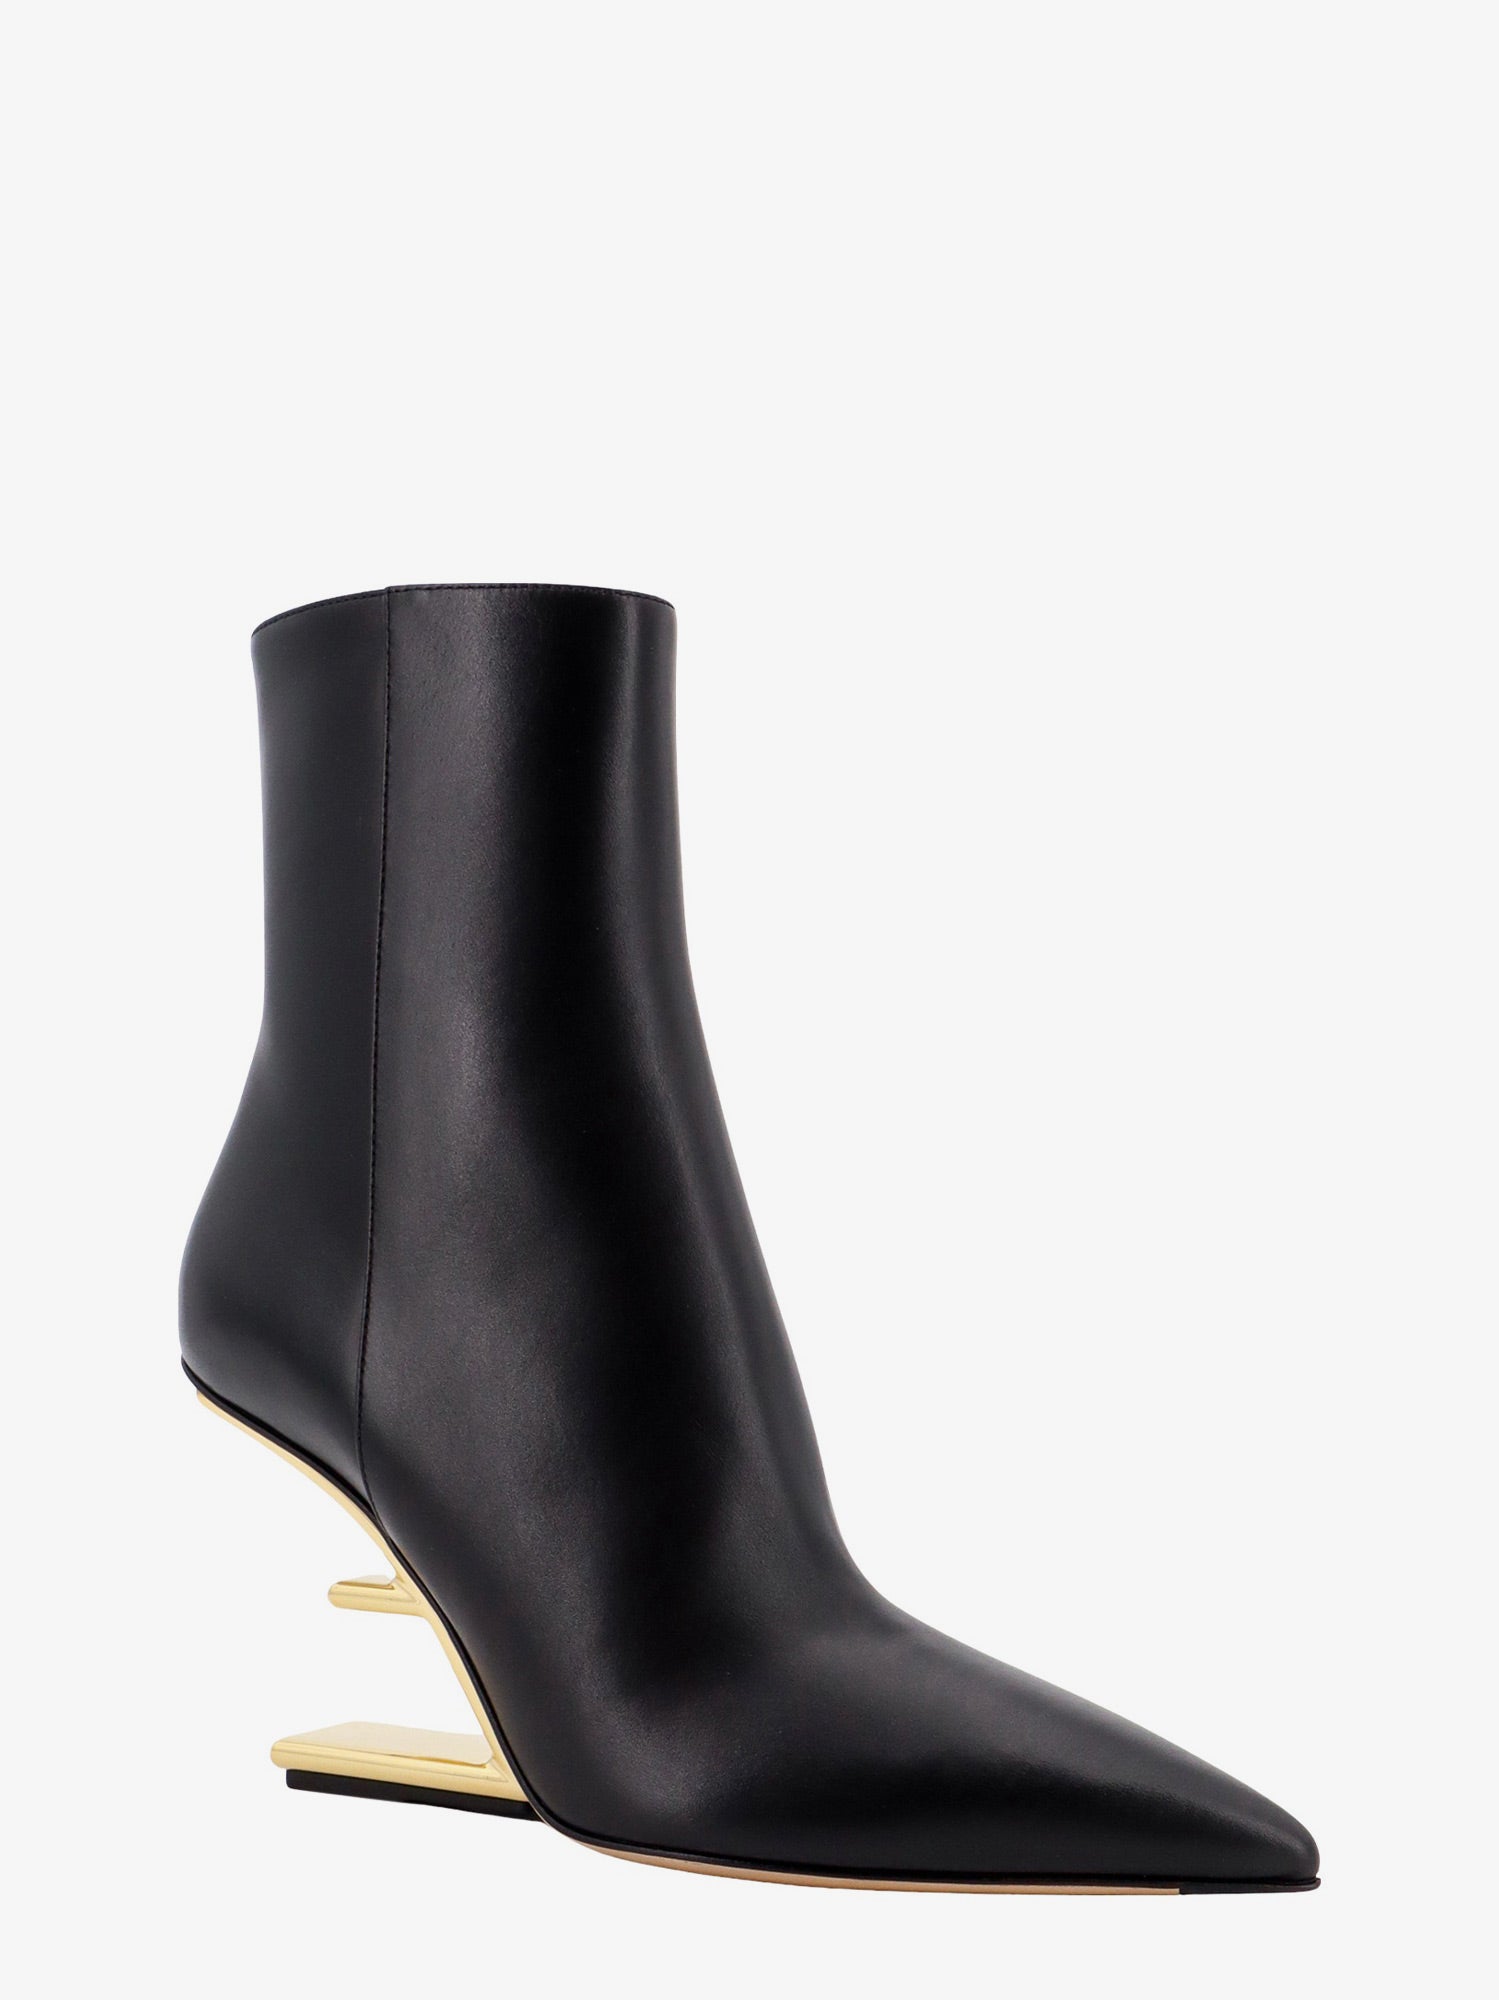 Louis Vuitton Illusion Ankle Boot BLACK. Size 36.5